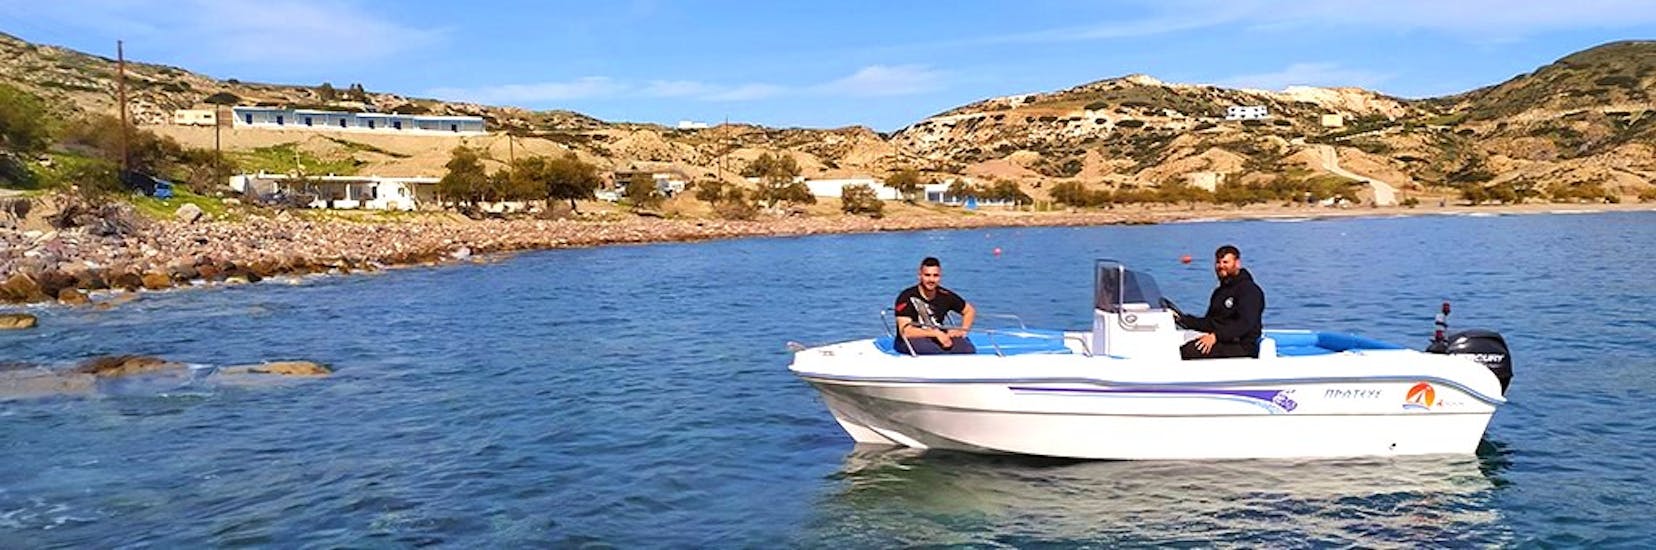 Noleggio barca da Agia Kiriaki intorno a Milos (fino a 6 persone).